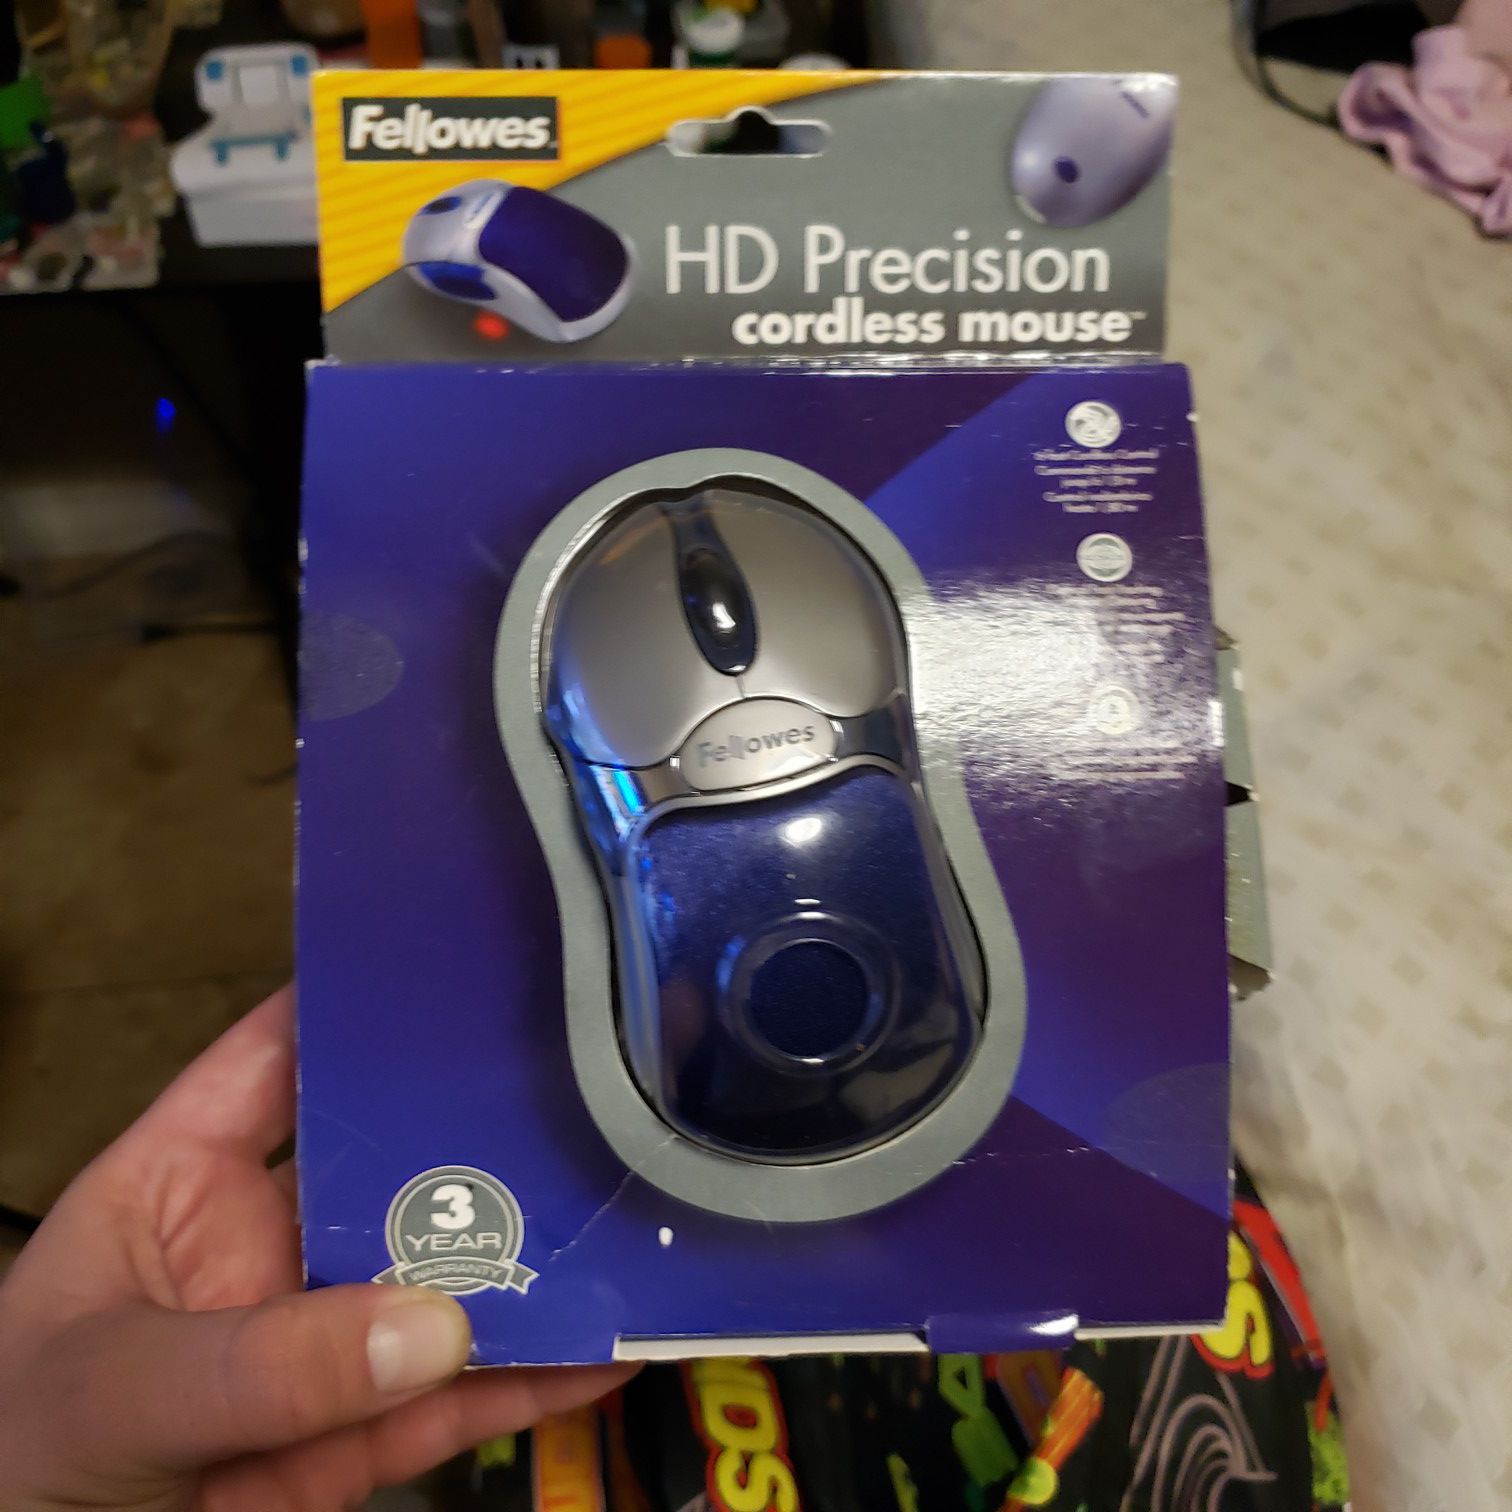 HD precision wireless mouse